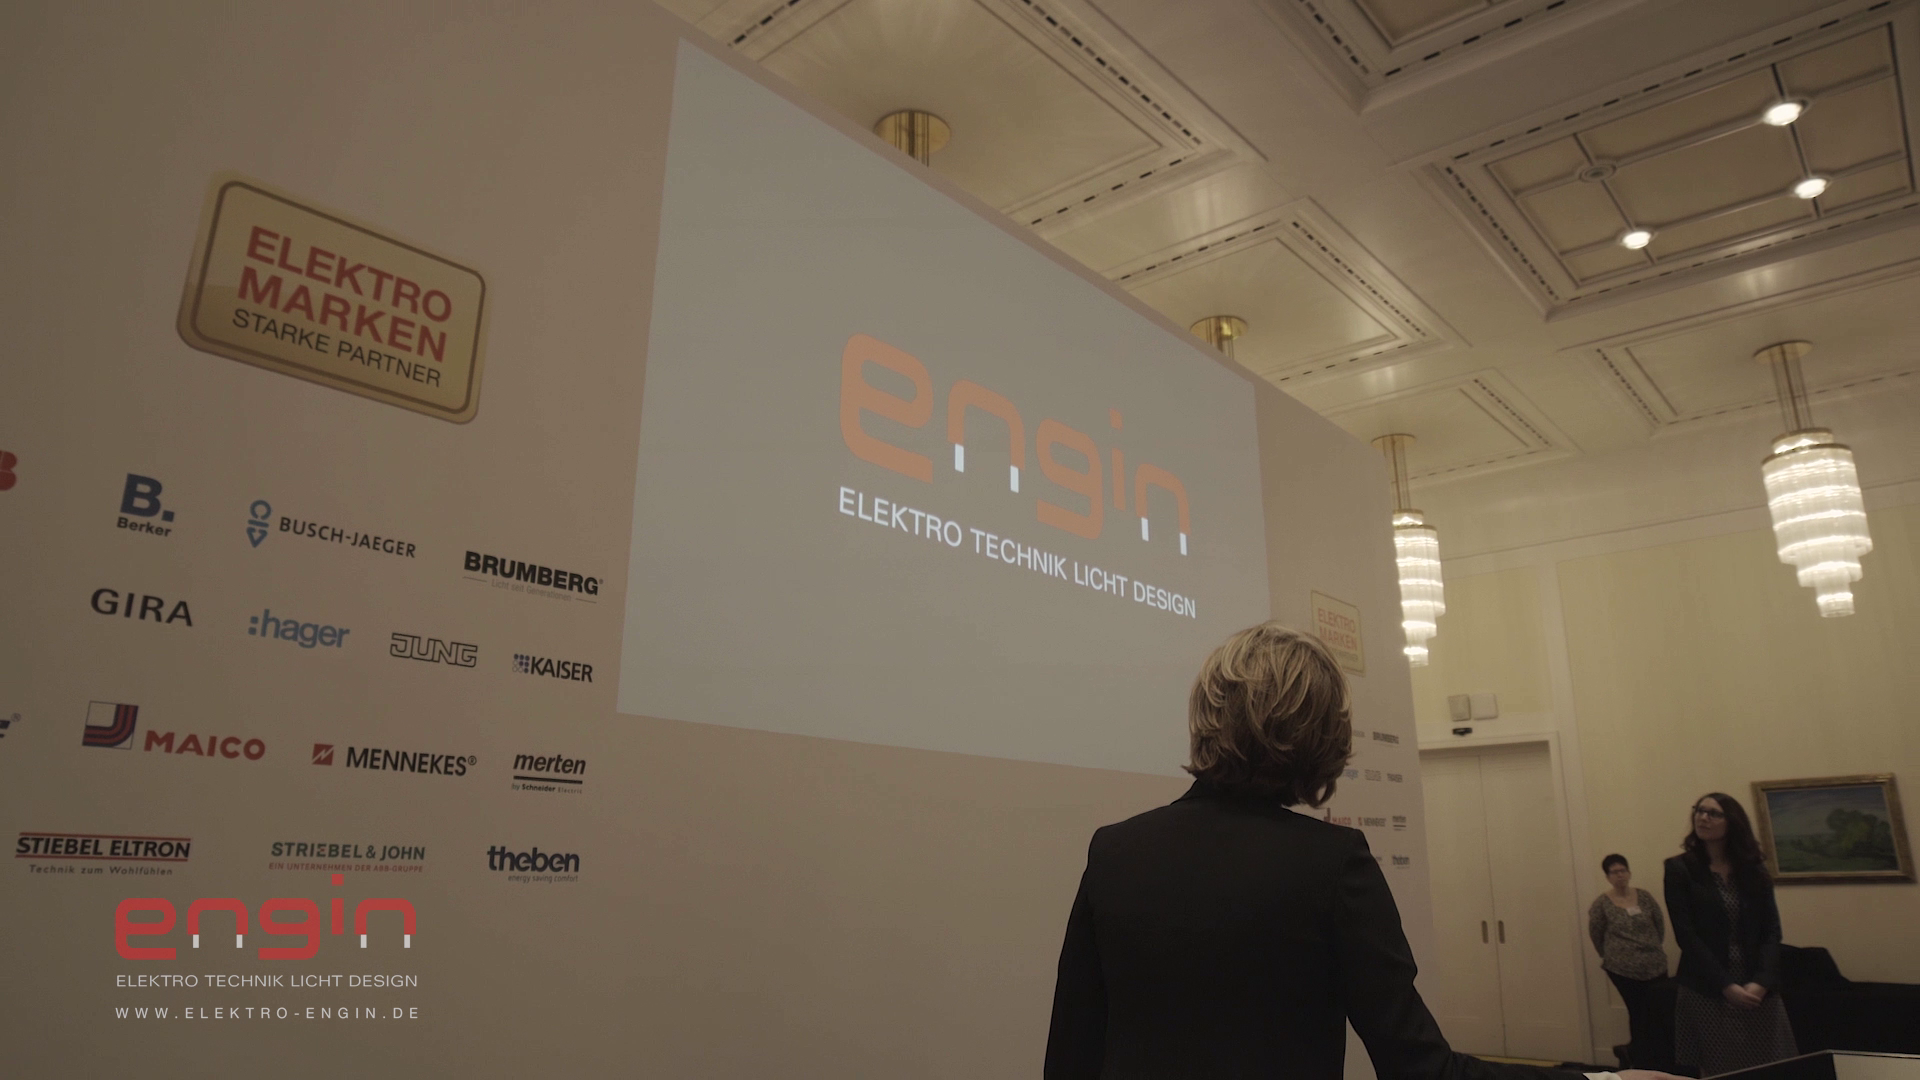 ELMAR preisverleihung 2016 - ENGIN elektro technik licht design
Adnan ENGIN + Ender ENGIN